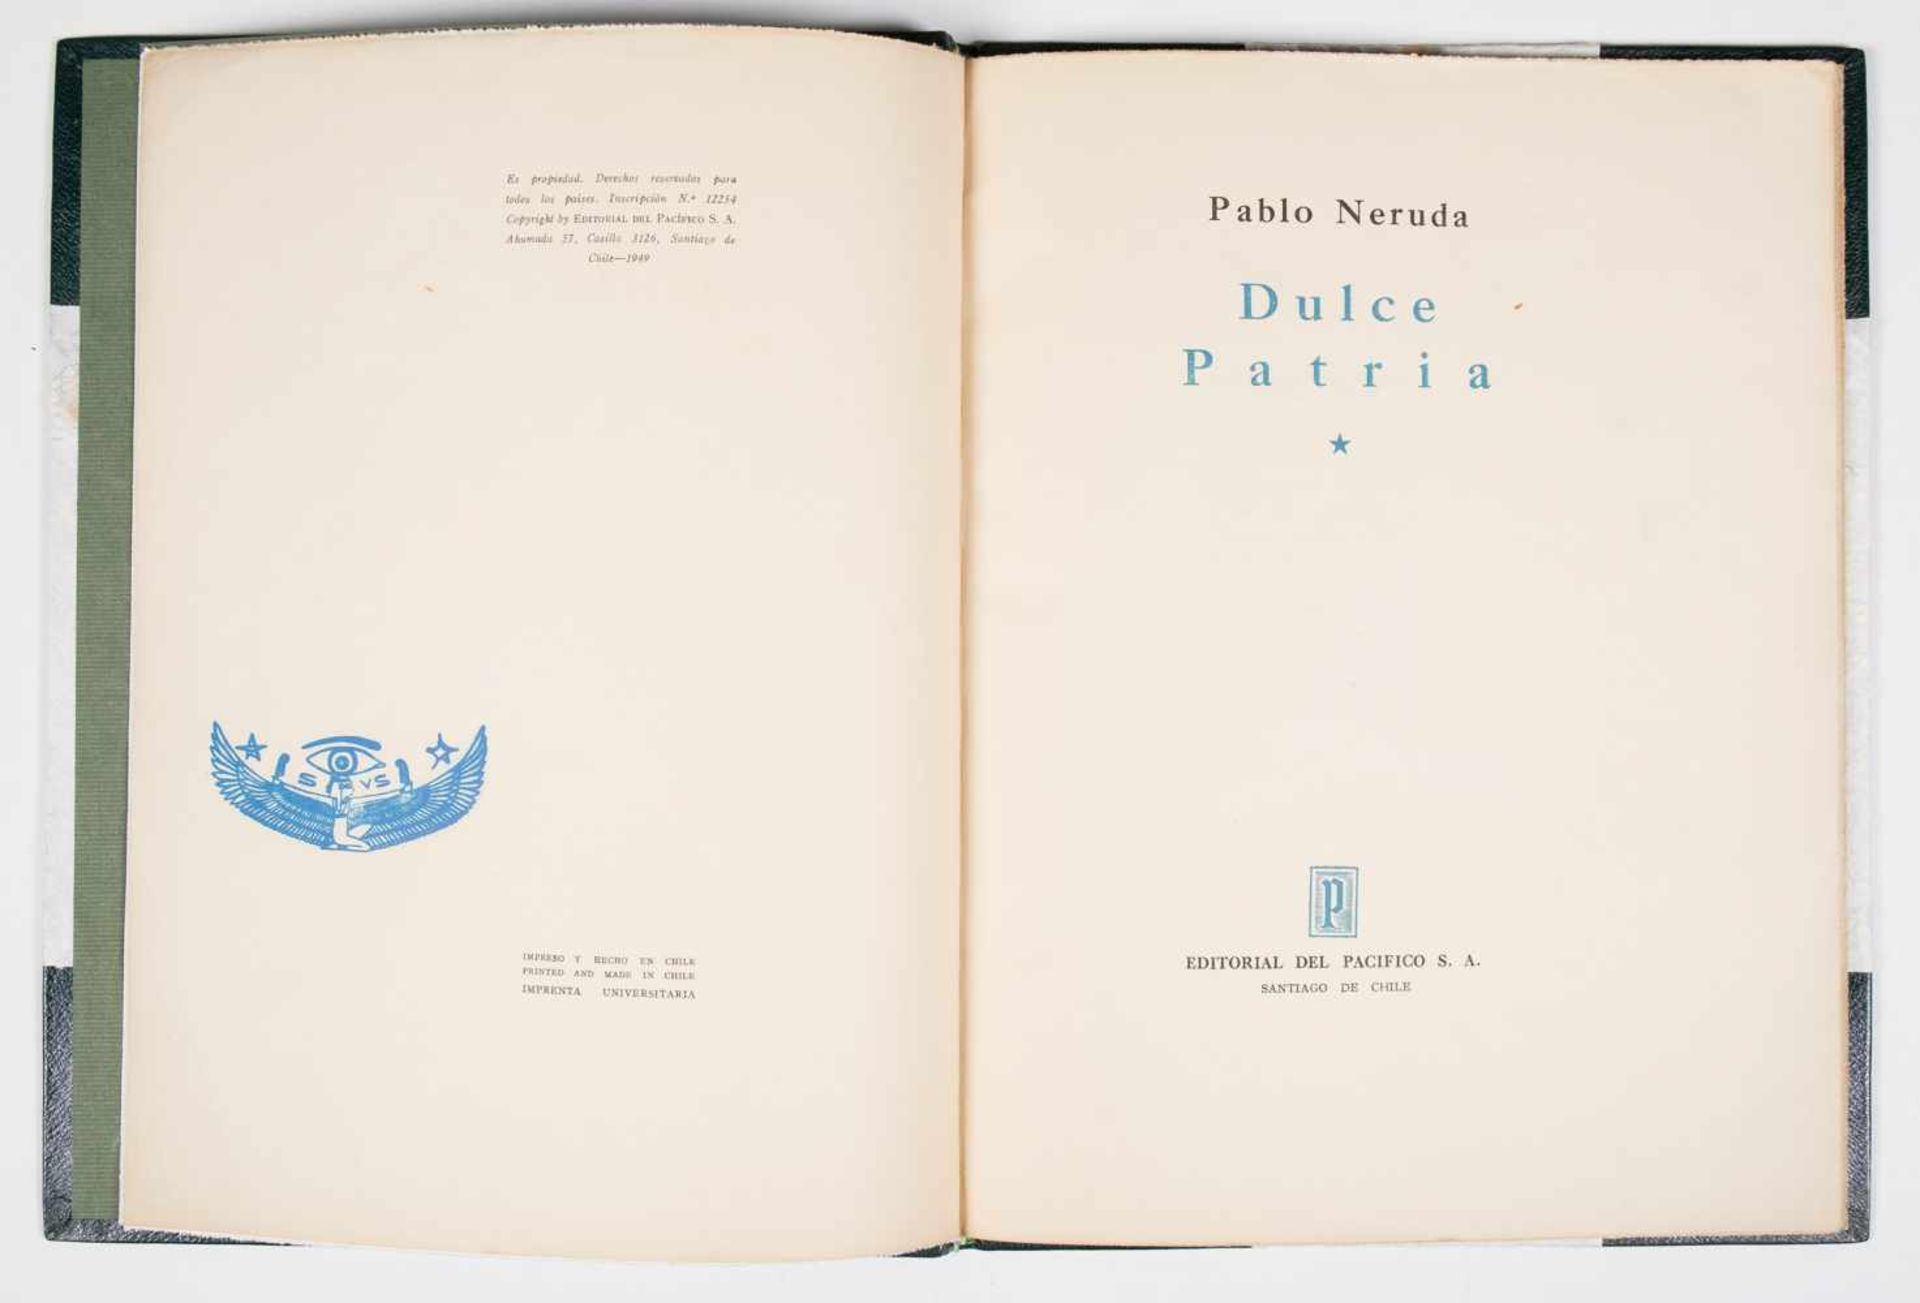 Neruda, Pablo. "Dulce patria". 1st edition. Santiago de Chile. Published by Pacífico, 1949. 44 pages